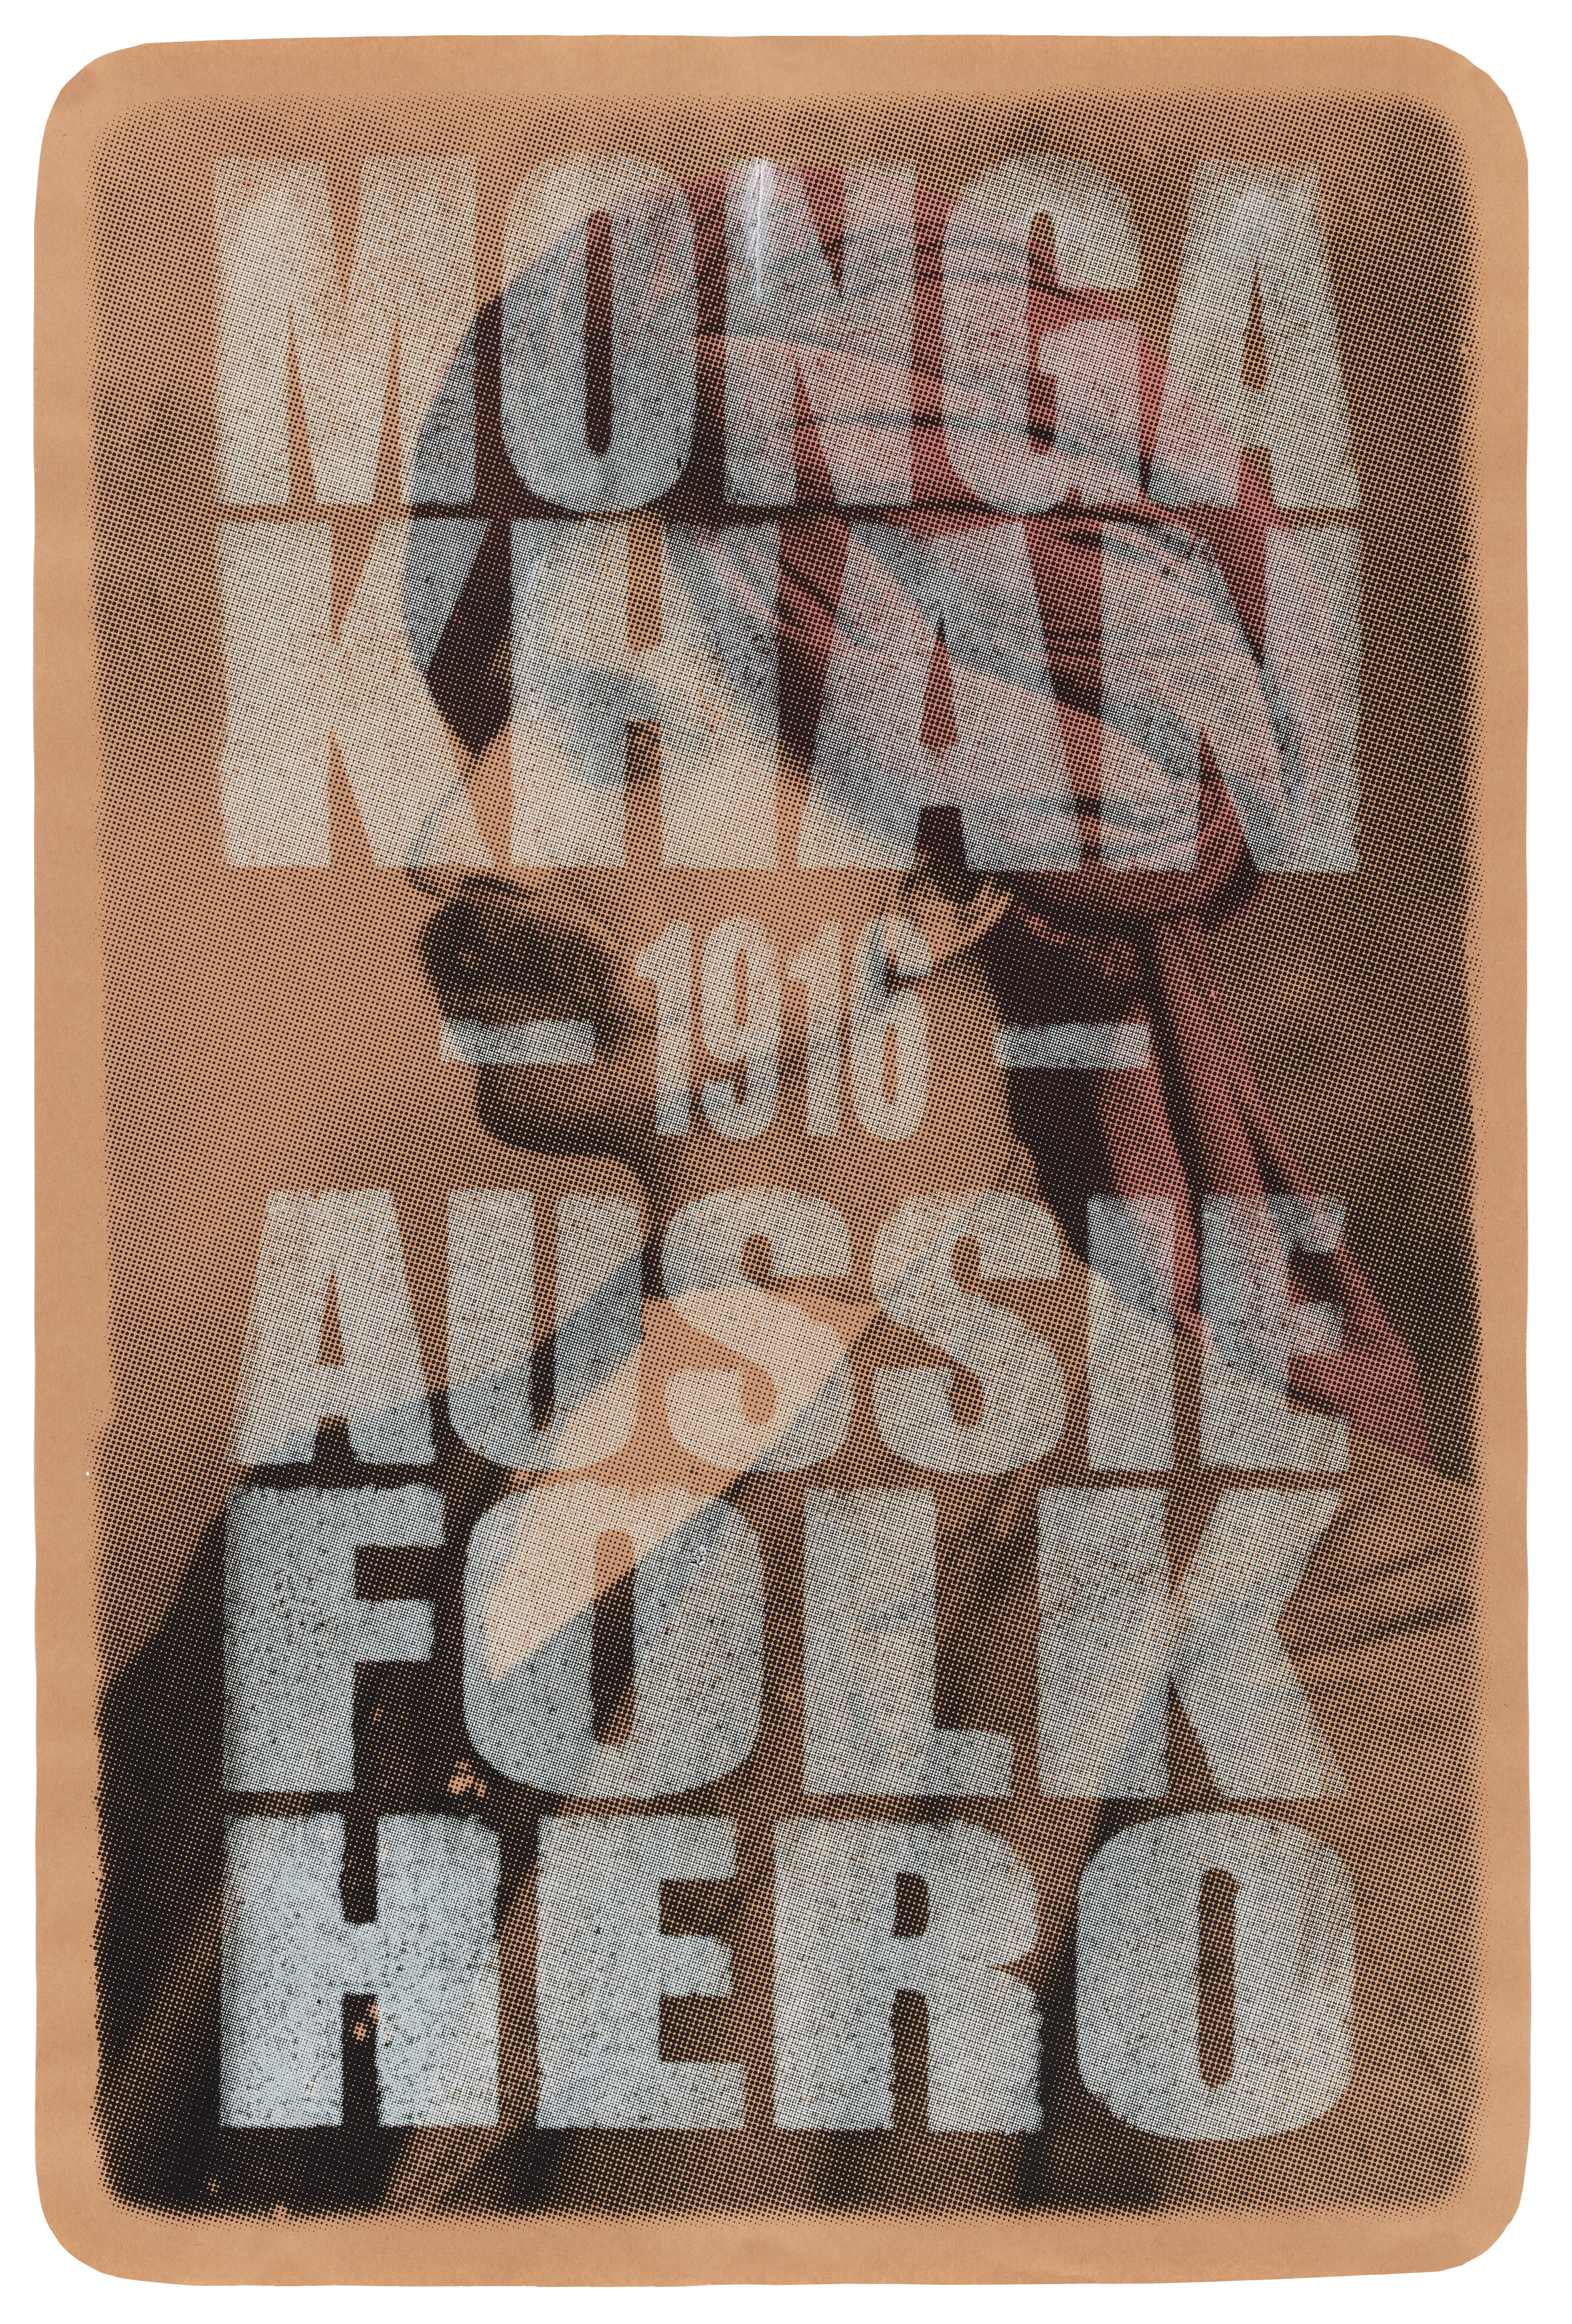 Poster, 'Monga Khan', designed by Peter Drew